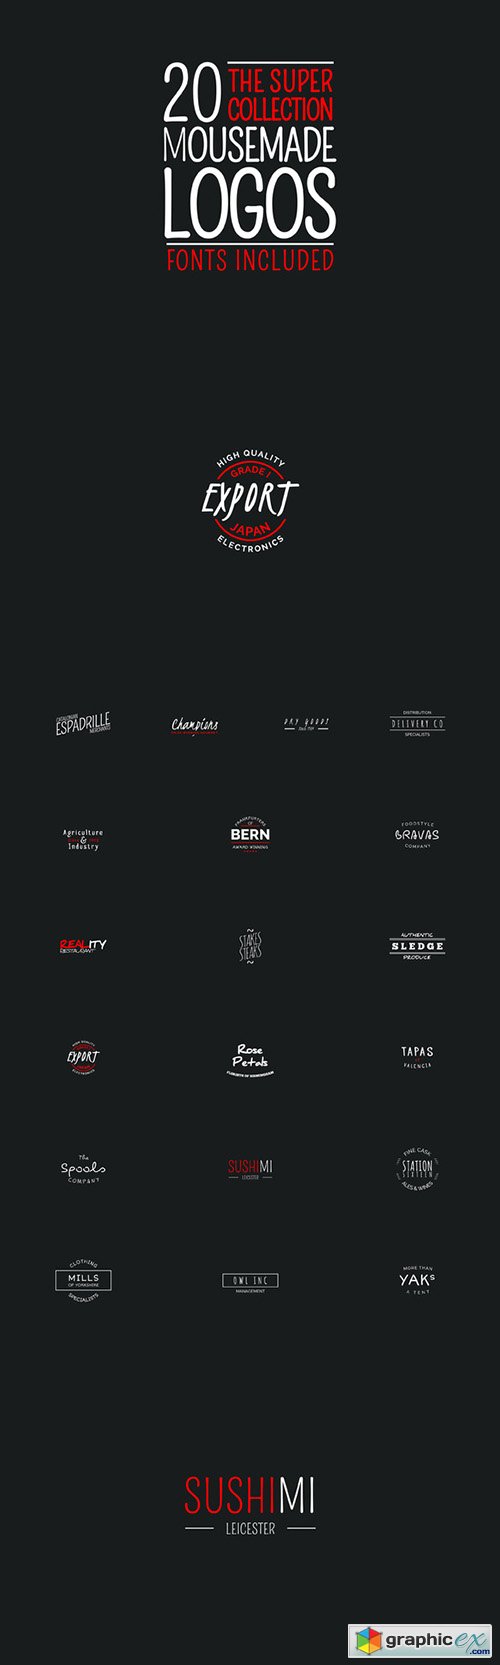 20 Mousemade Logos Bundle